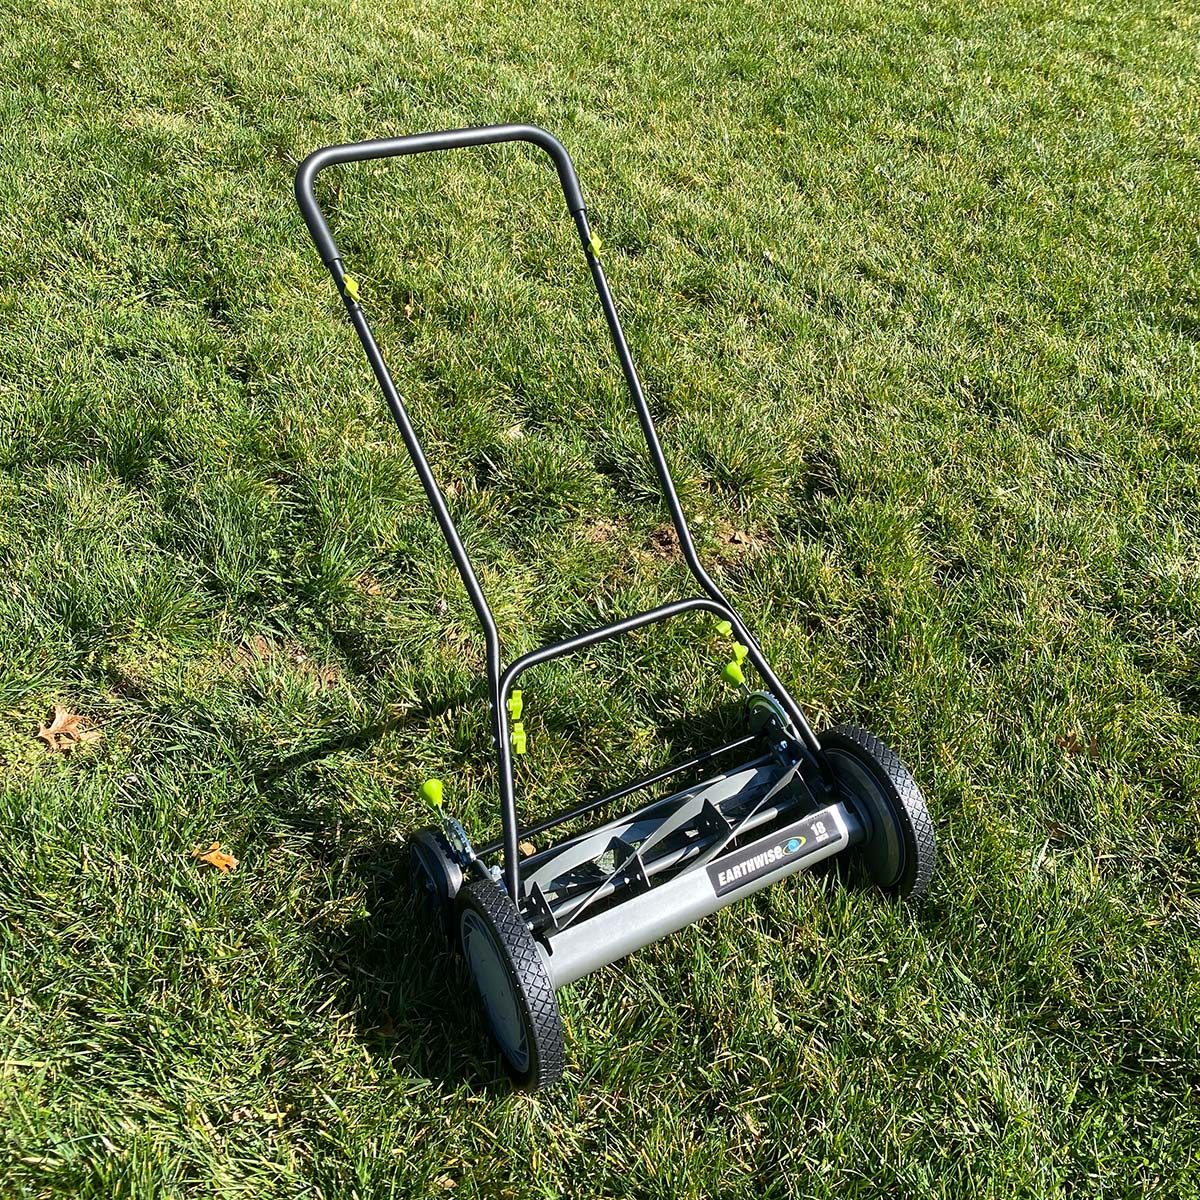 Reel Mowing Tall Grass, Will It Work? 